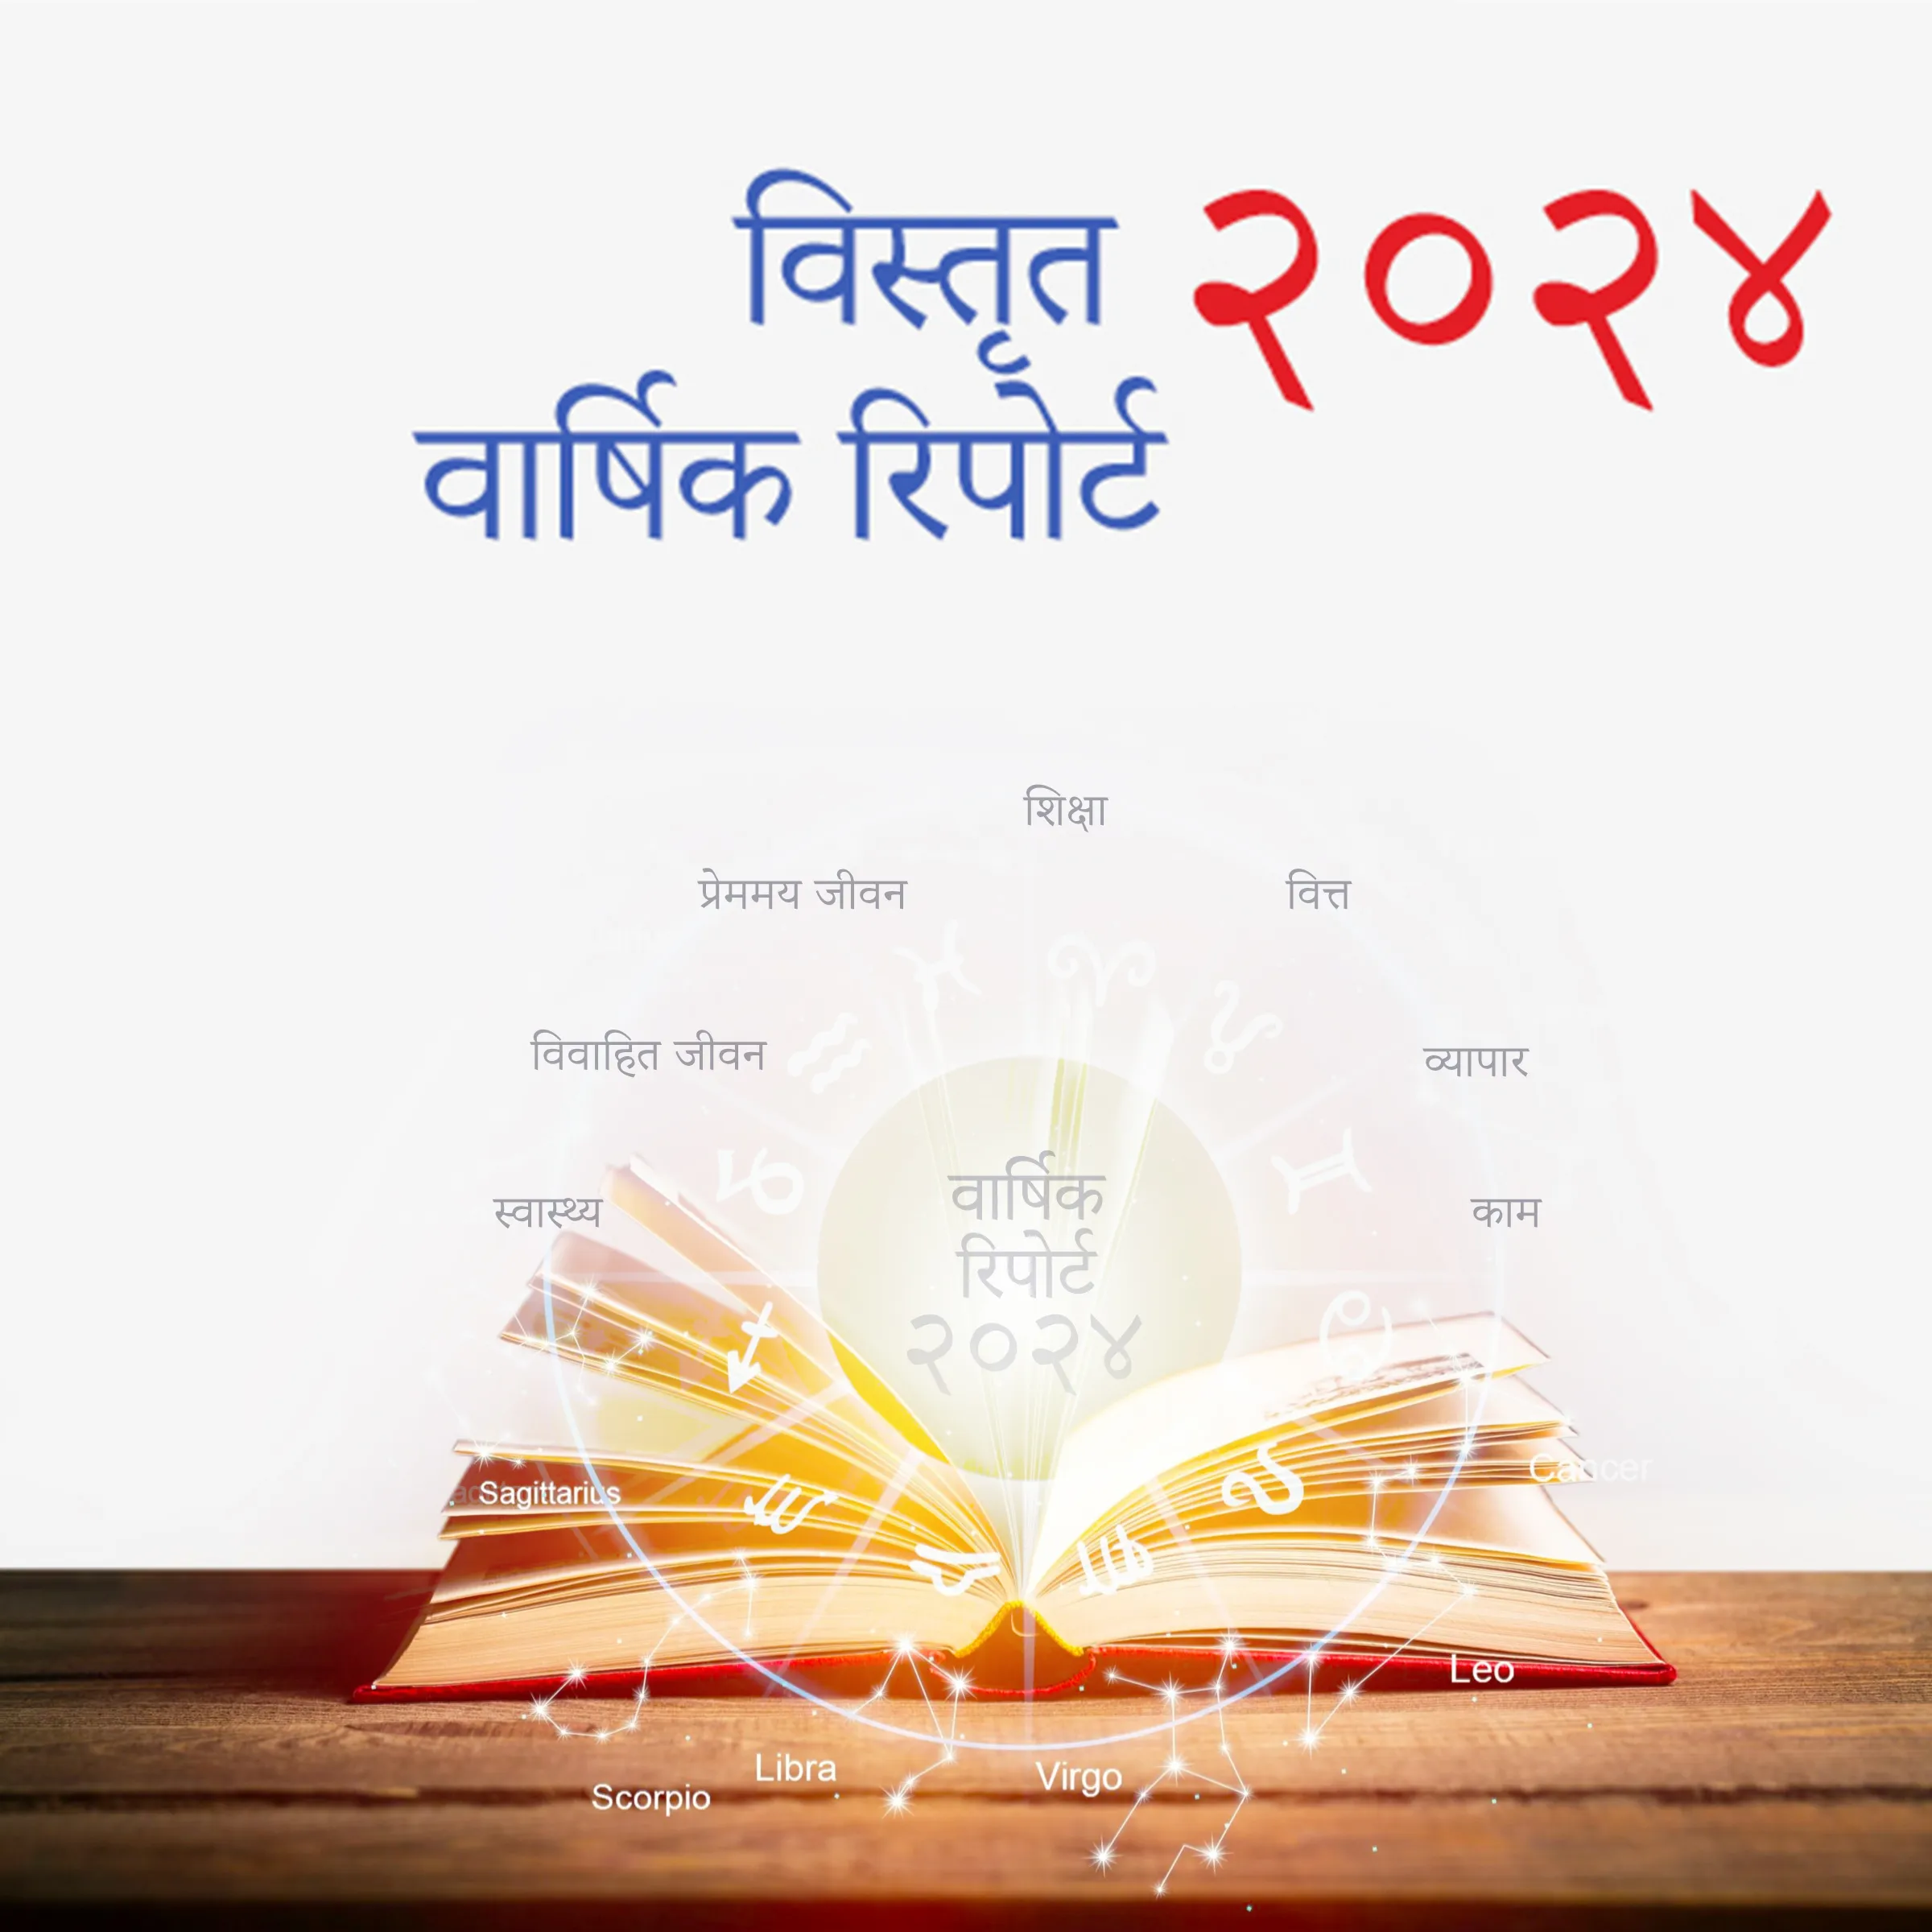 २०२४ विस्तृत वार्षिक रिपोर्ट – Acharya Upamanyu